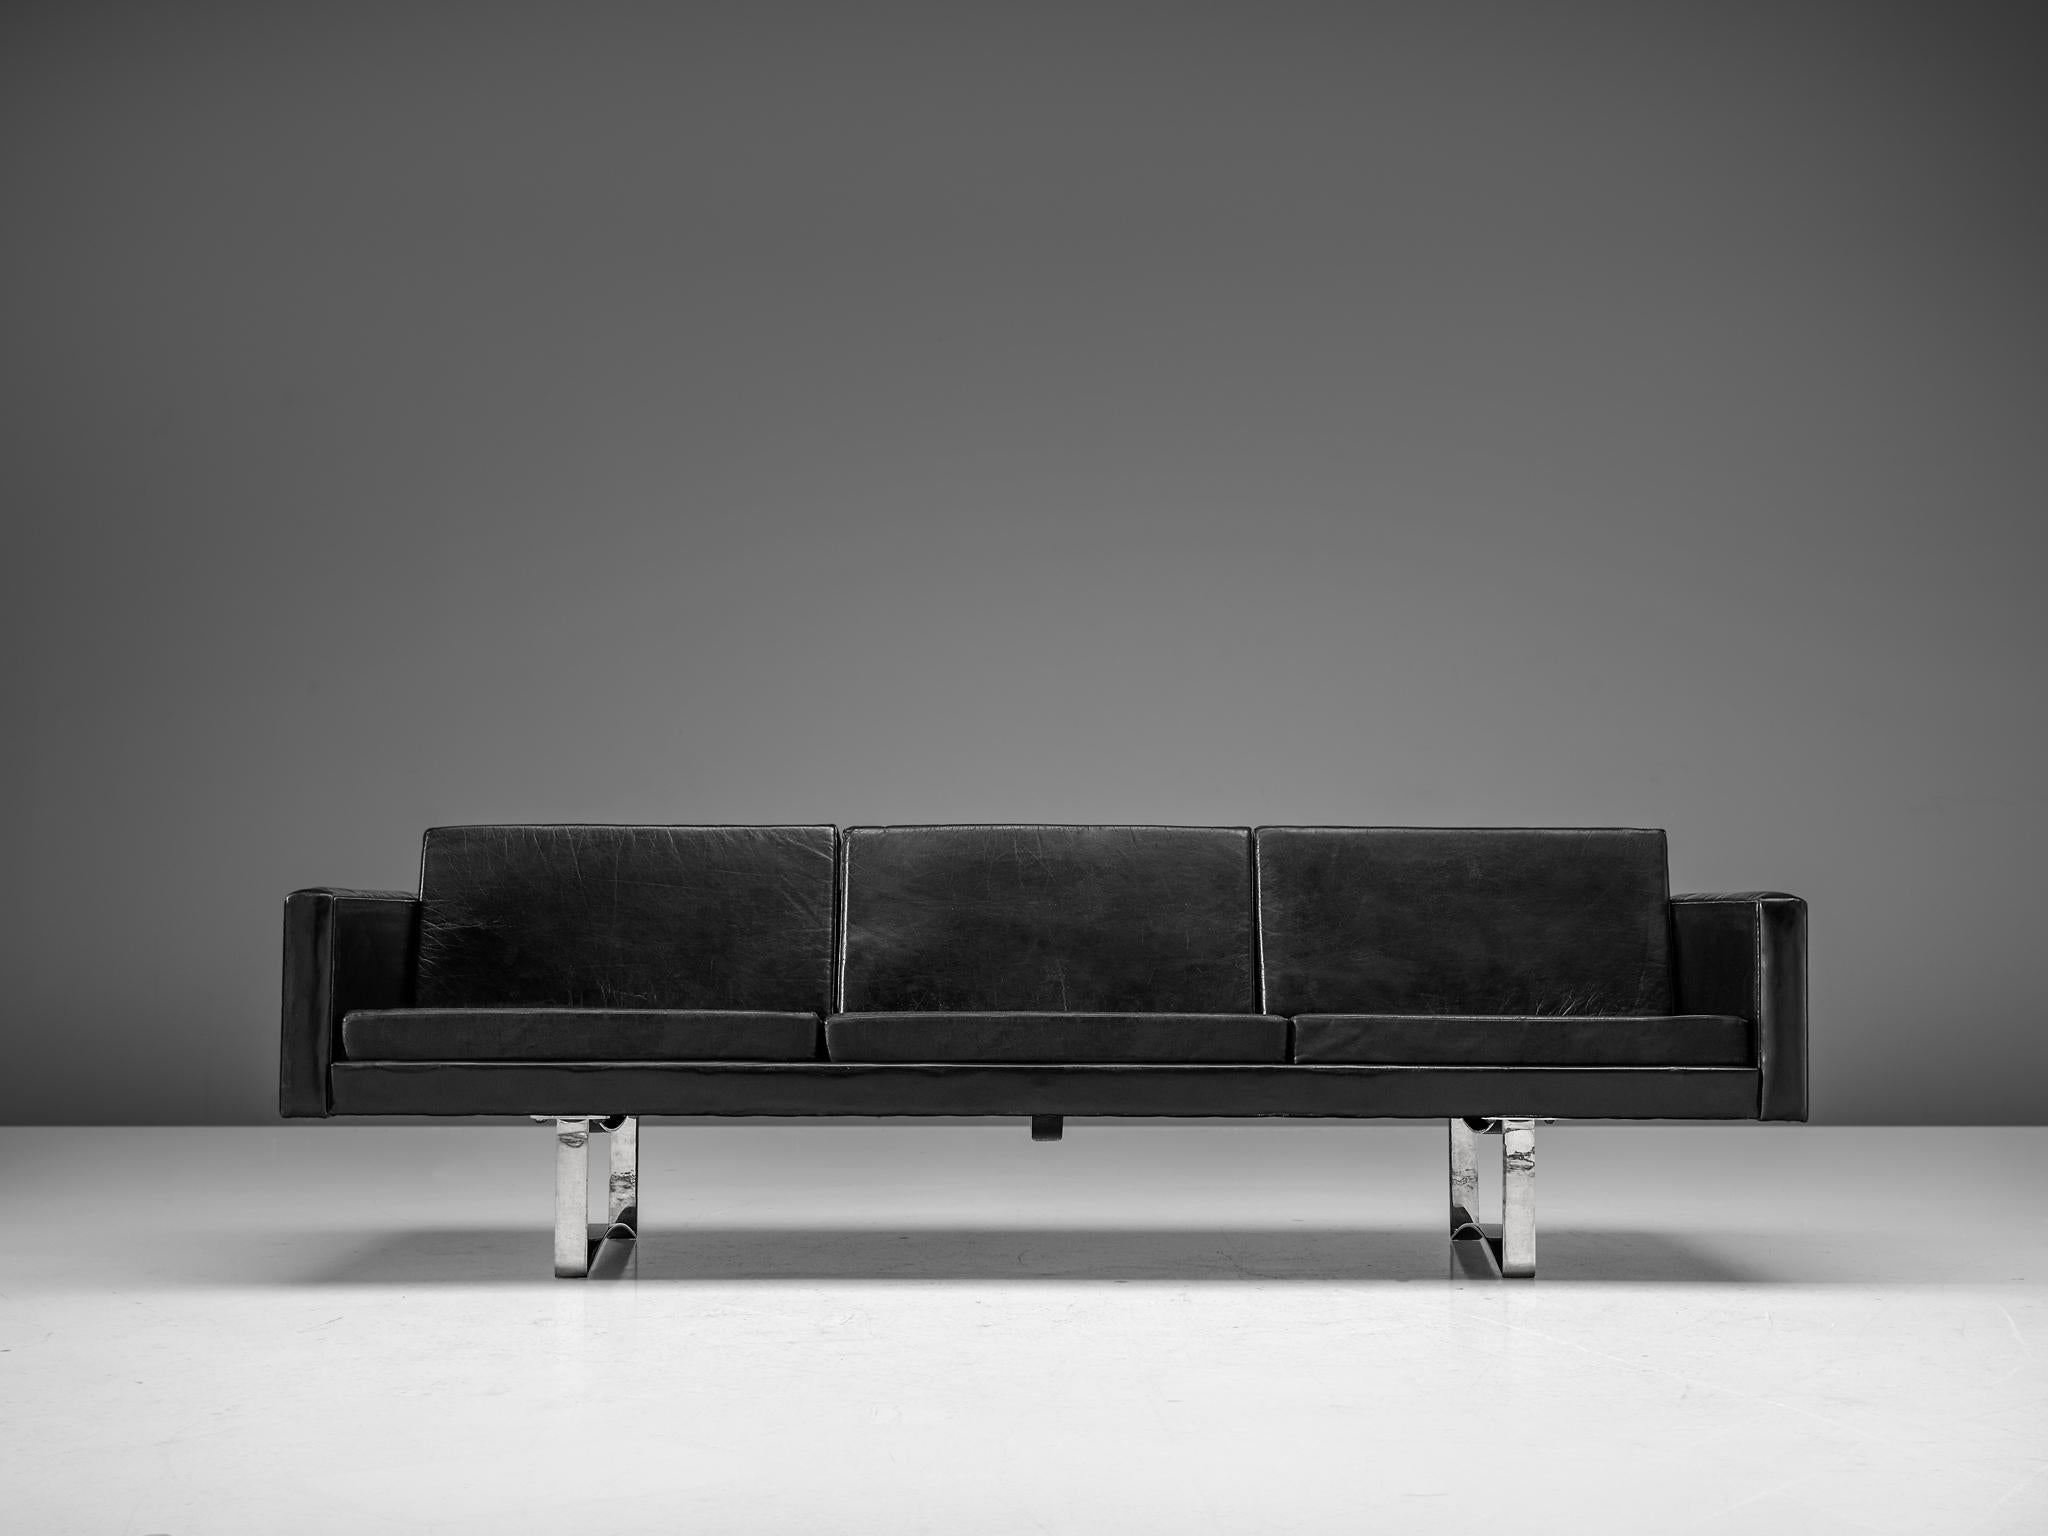 Scandinavian Modern Bodil Kjaer Sofa in Black Leather and Steel For Sale